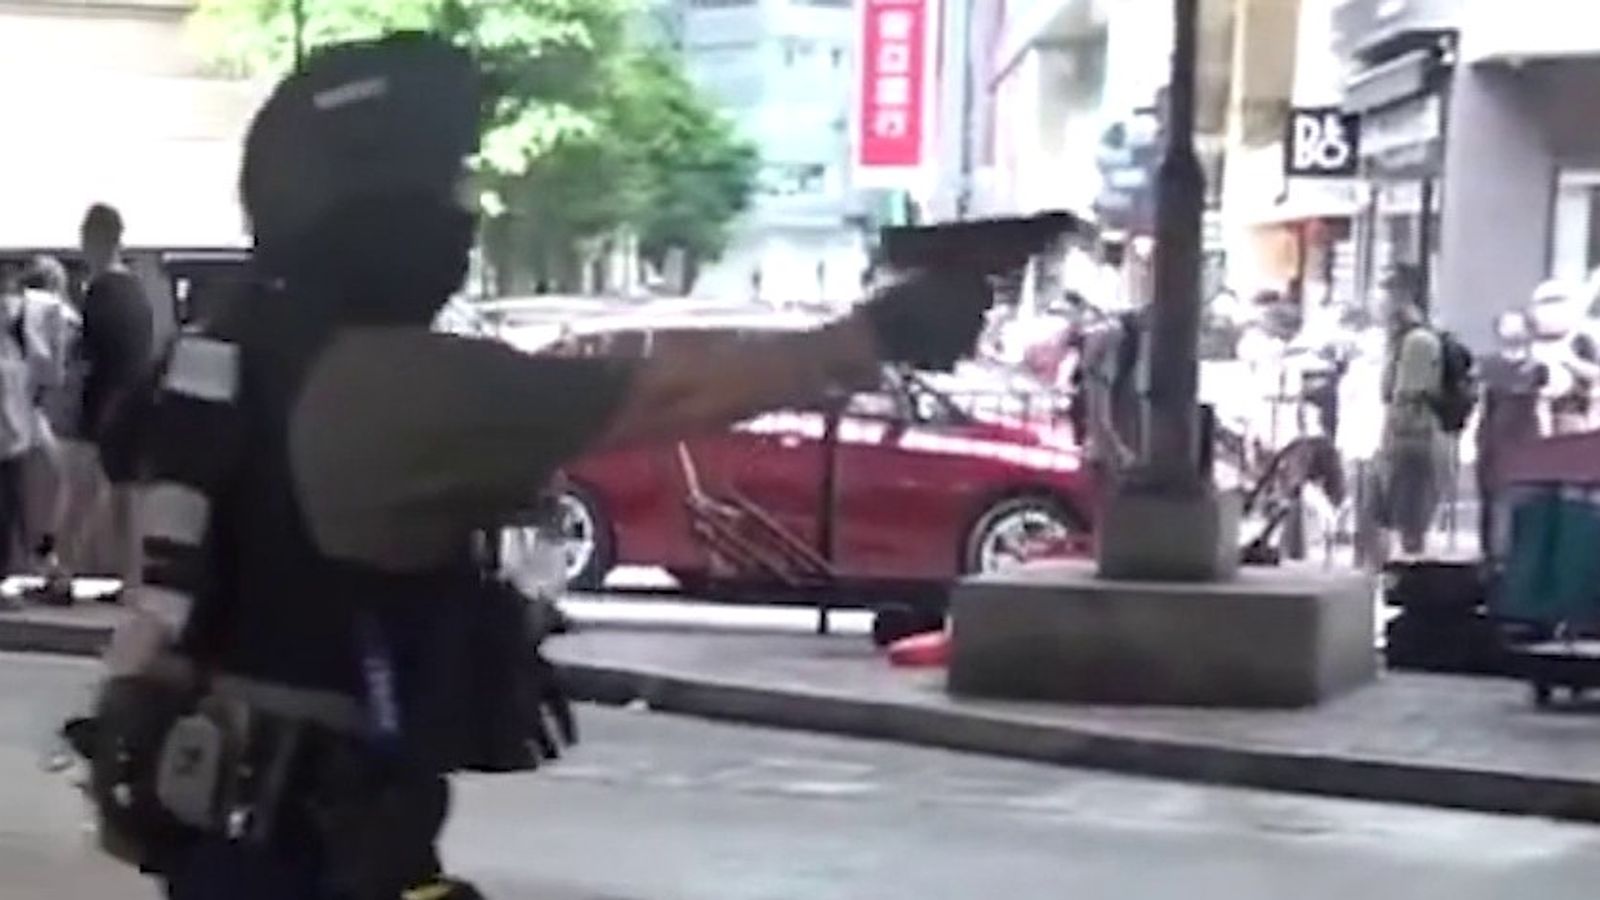 Officer pulls gun on Hong Kong protesters